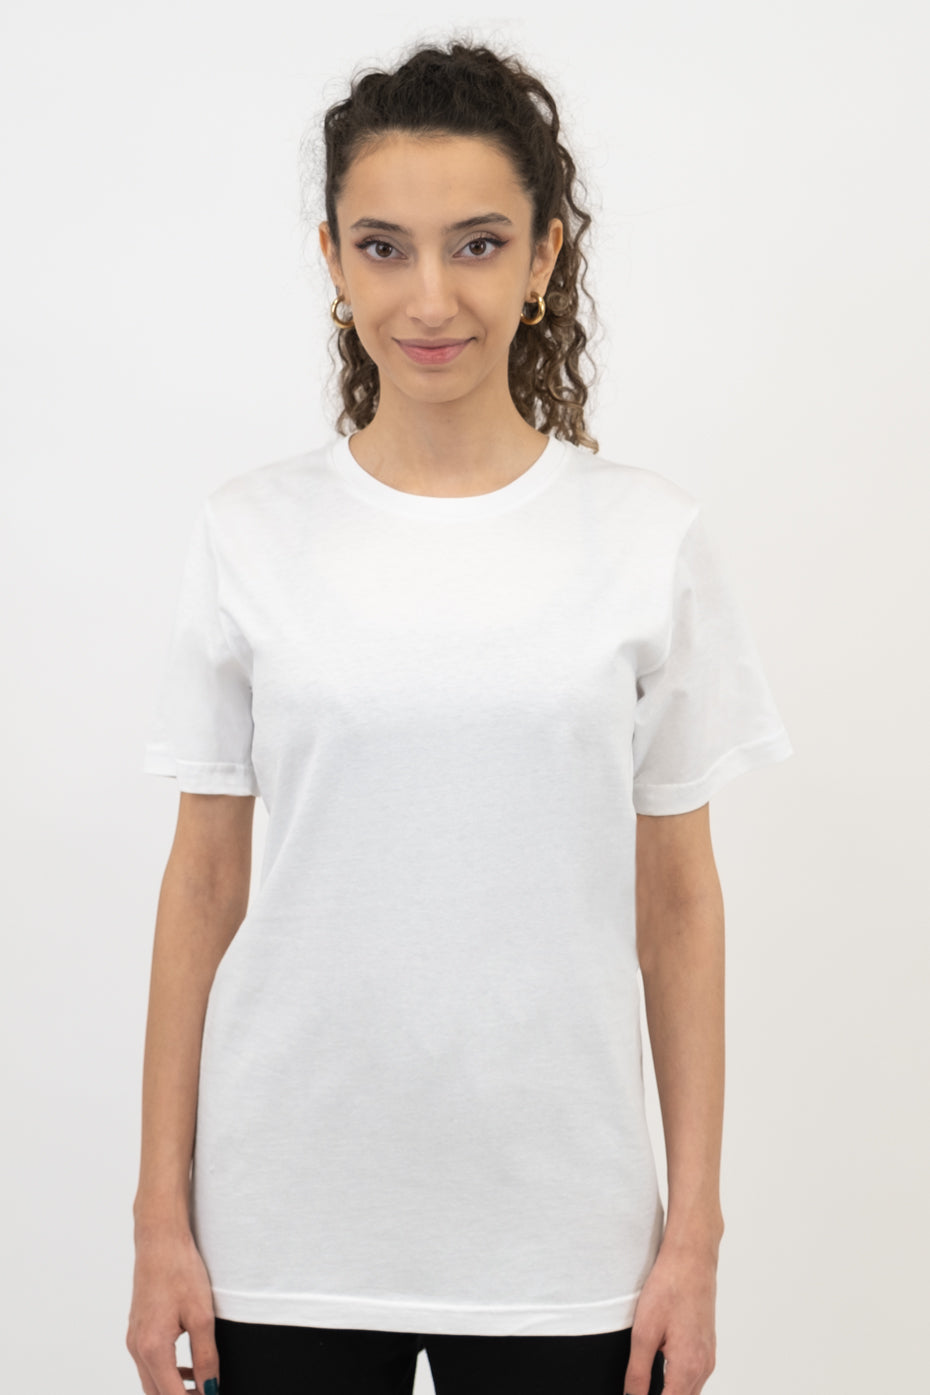 Women’s White T-Shirts – 100% Polyester